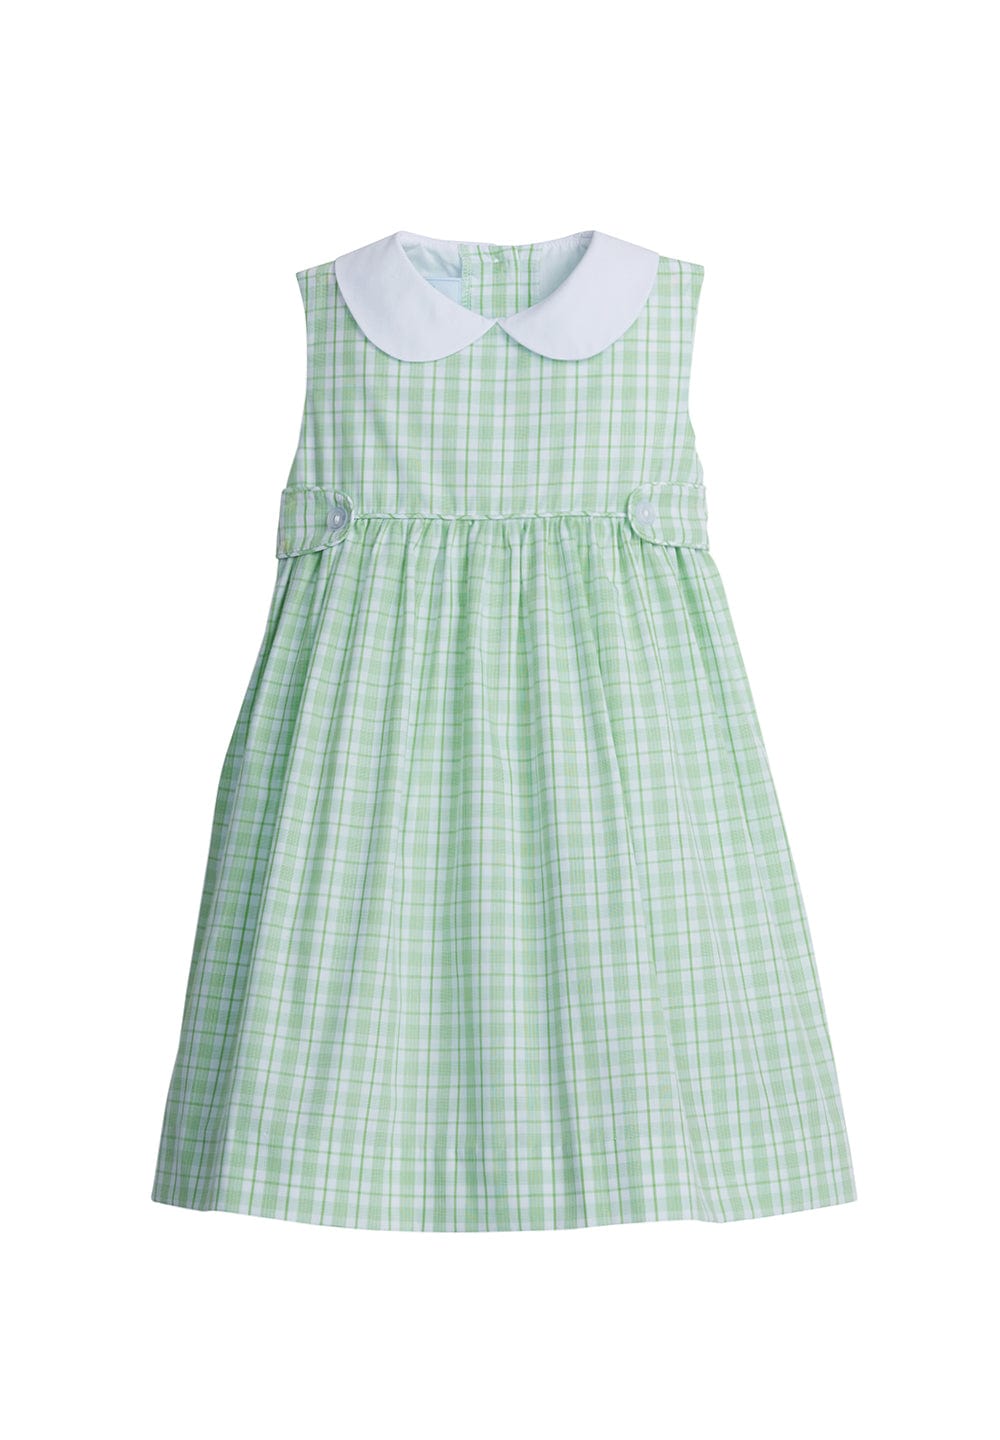 seguridadindustrialcr girl's green plaid sleeveless dress for spring